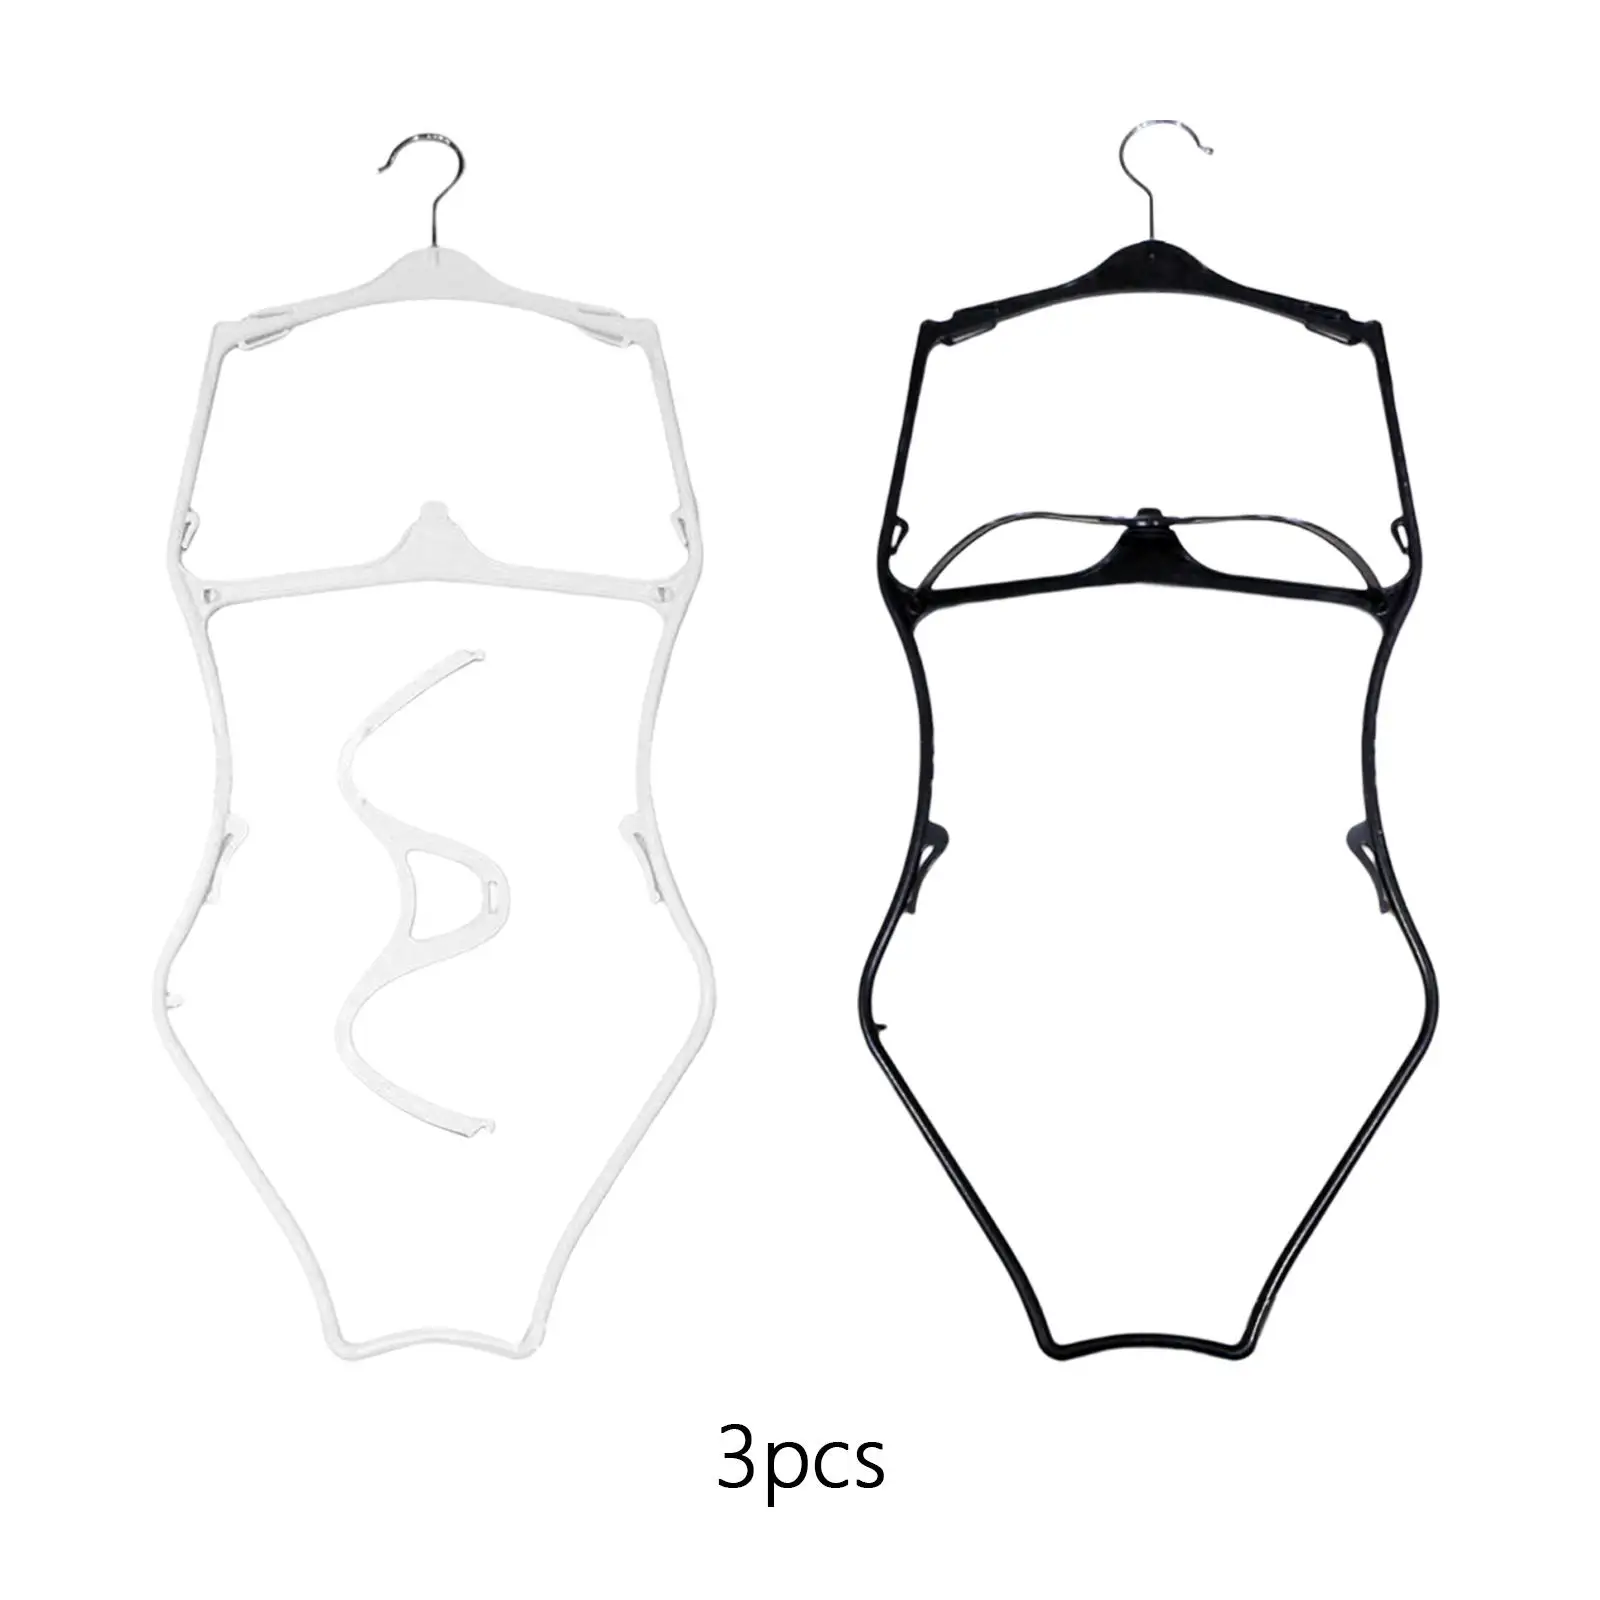 3Pcs Swimsuit Hangers Hanging Rack Holder Body Shape Bikini Hanger Bikini Hangers for Robes Scarves Sleepwear Dresses Belts